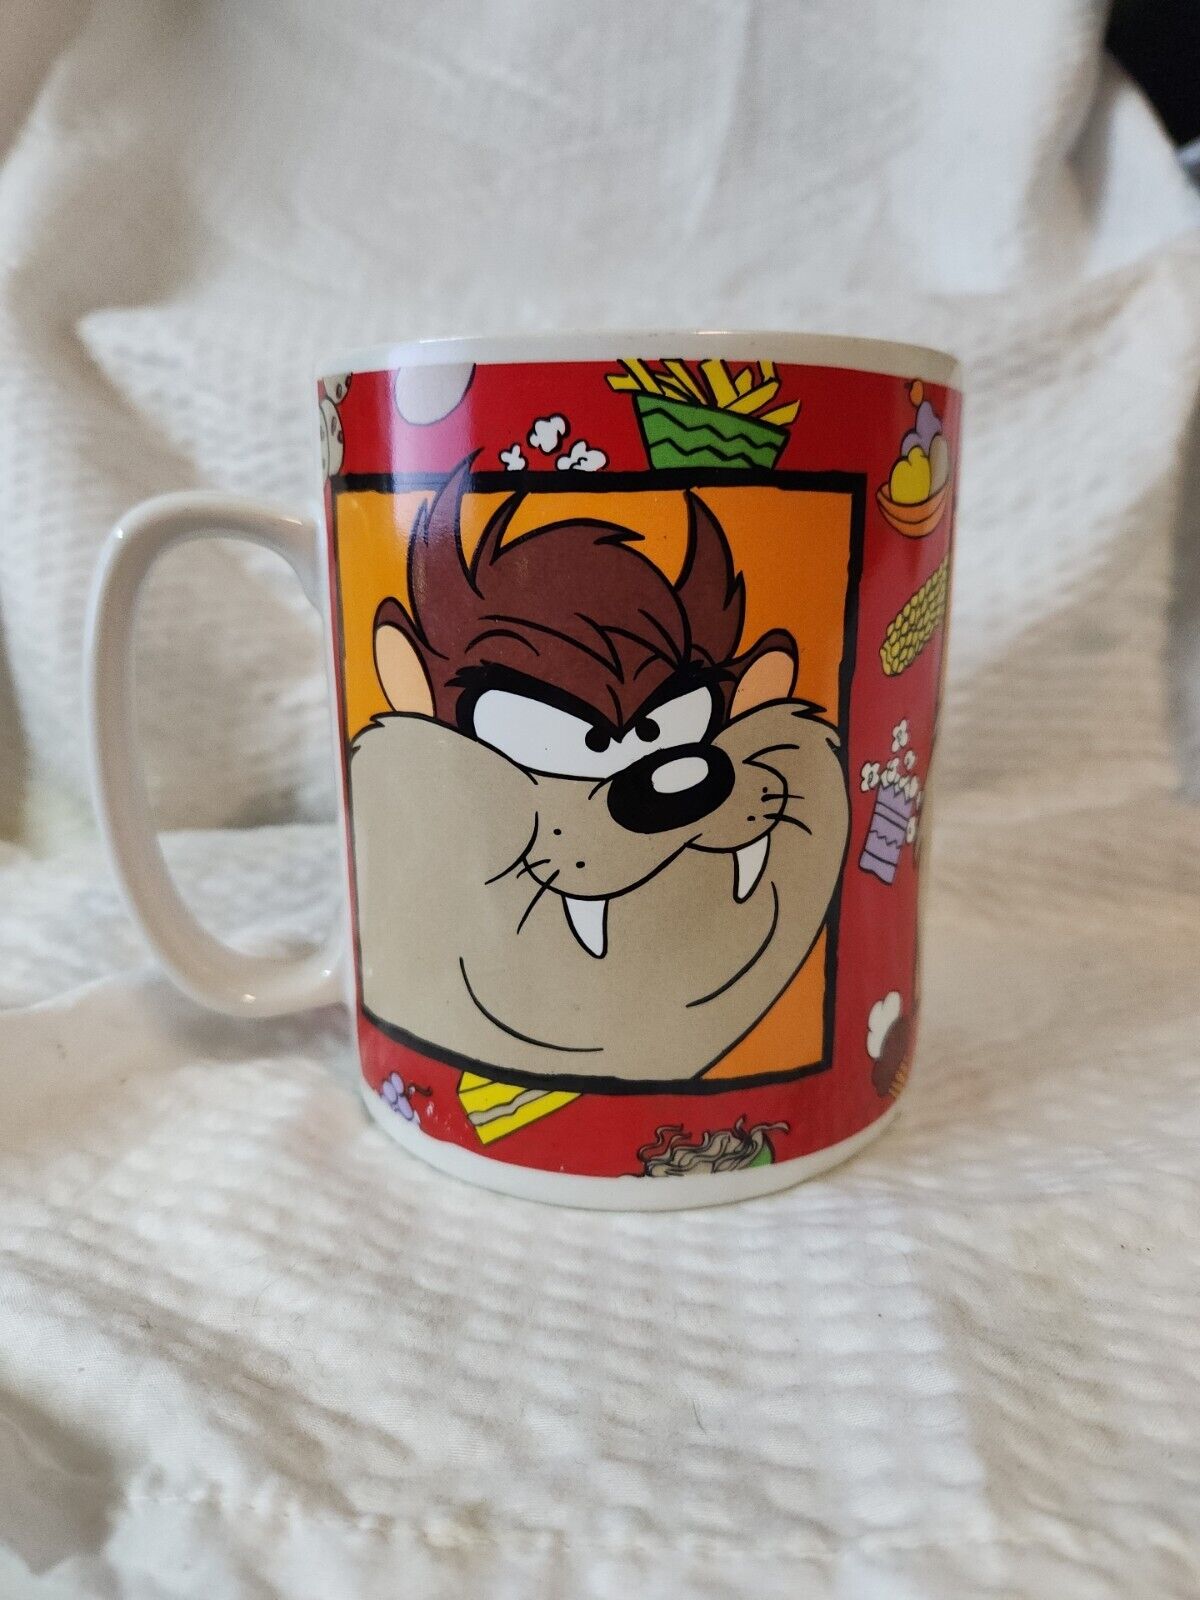 Vintage 1993 Warner Bros. Looney Tunes Taz Mug Cup by Sakura